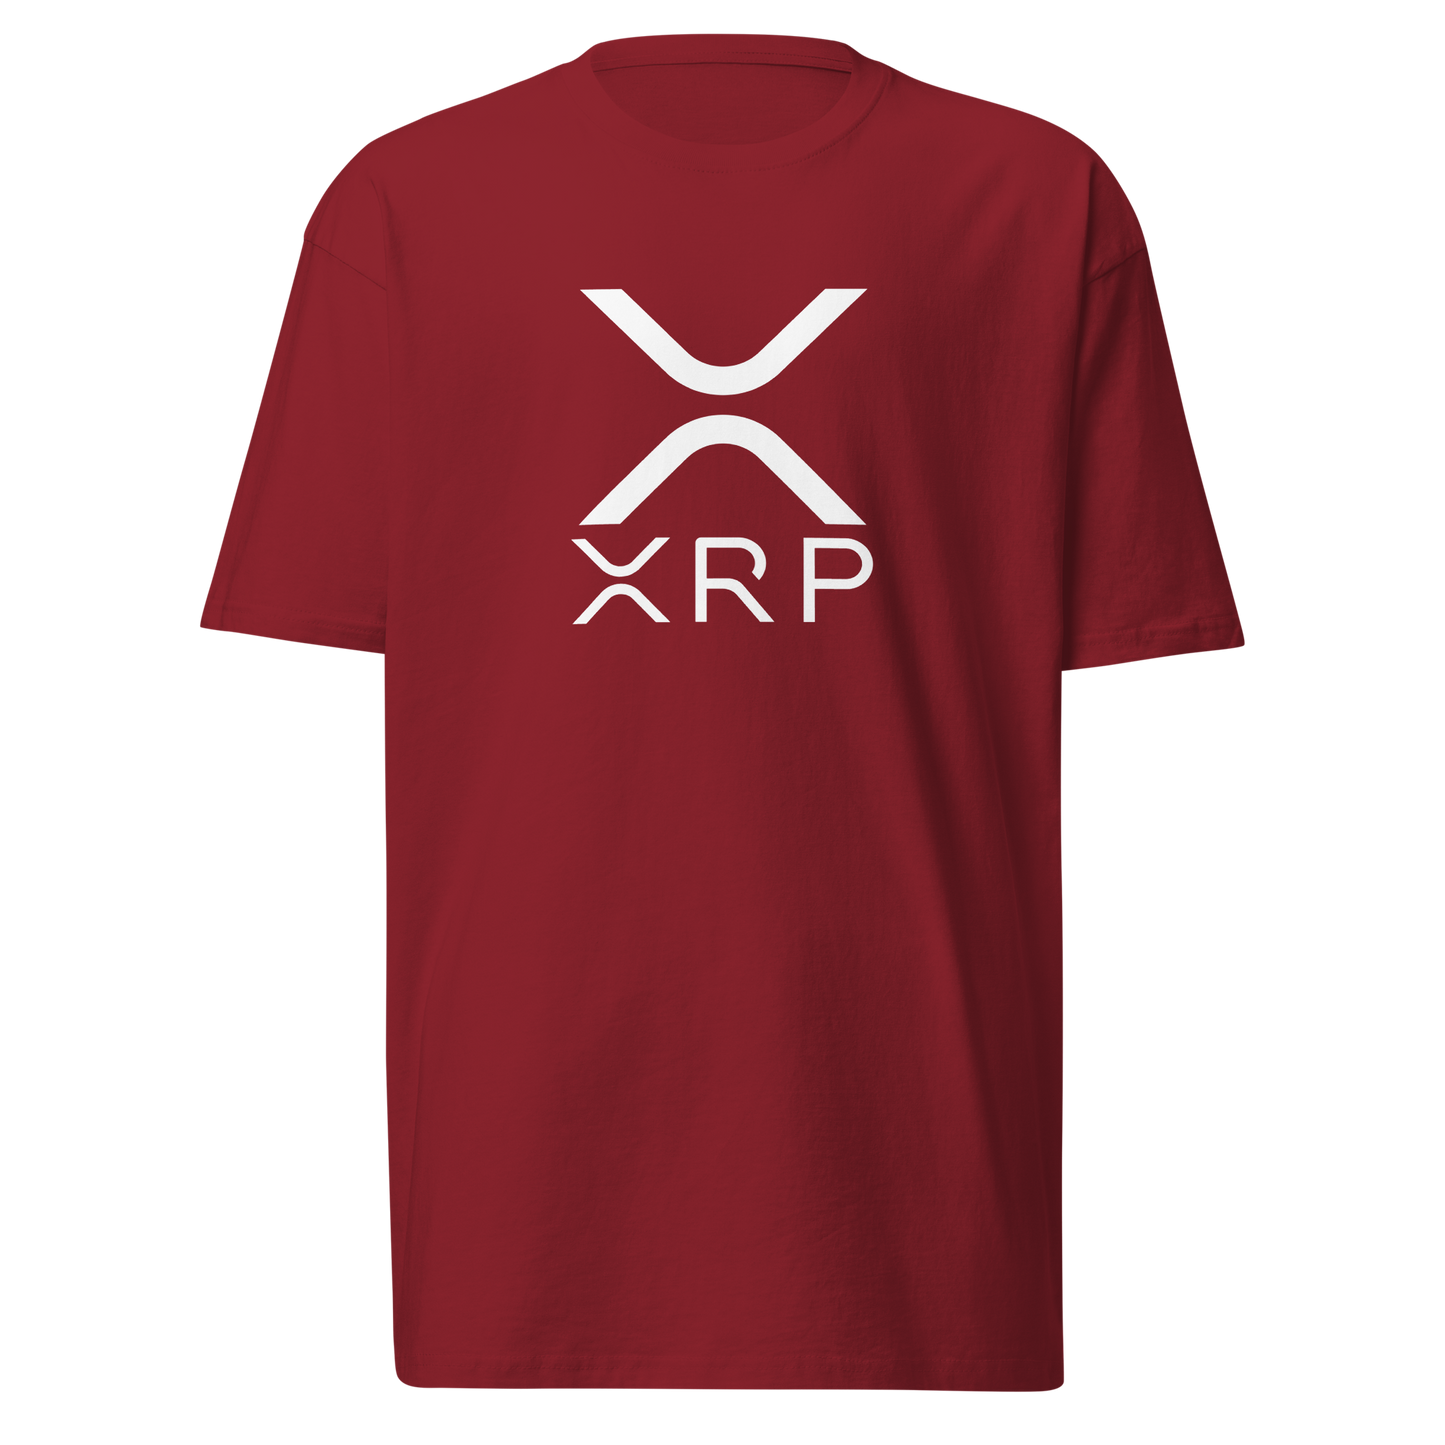 XRP Sysbol and Text (White) - Men’s premium heavyweight tee